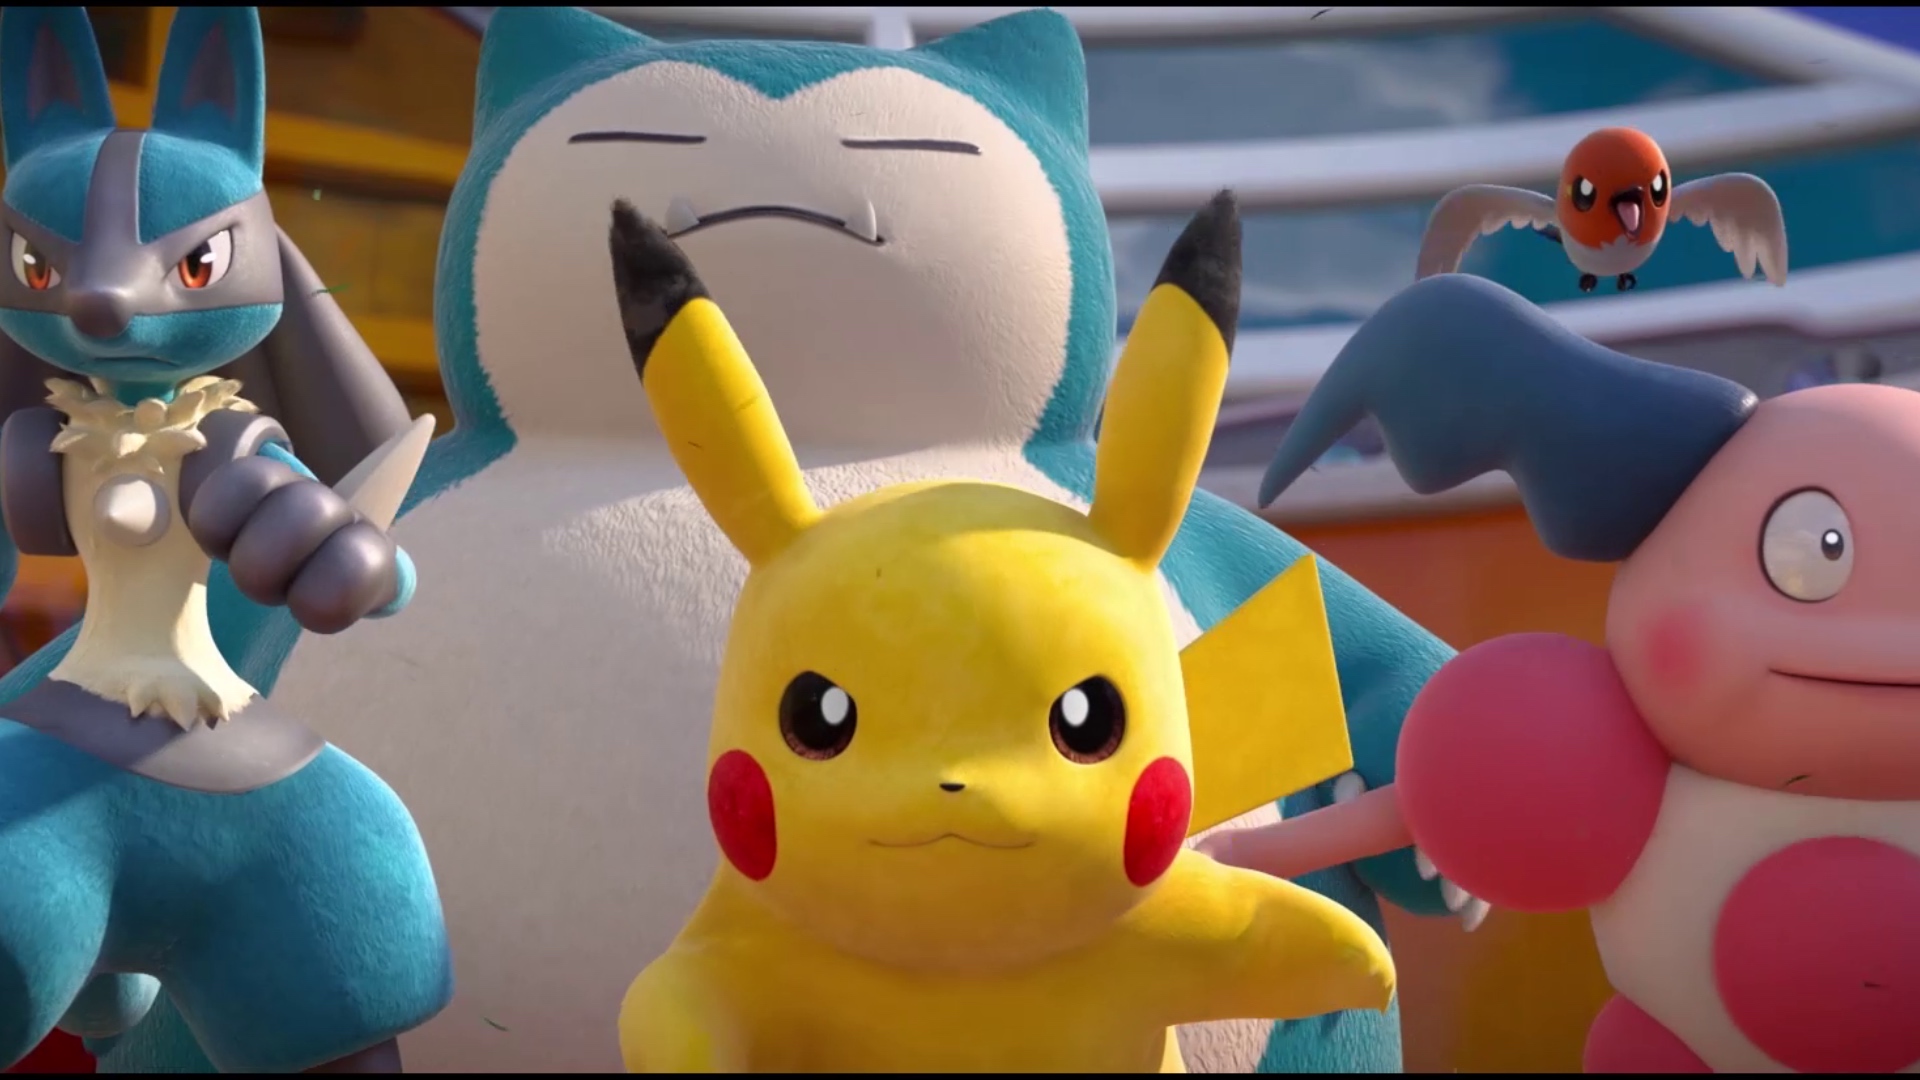 Pokémon GO surpasses $5 billion in revenue as it turns 5 years old - 9to5Mac